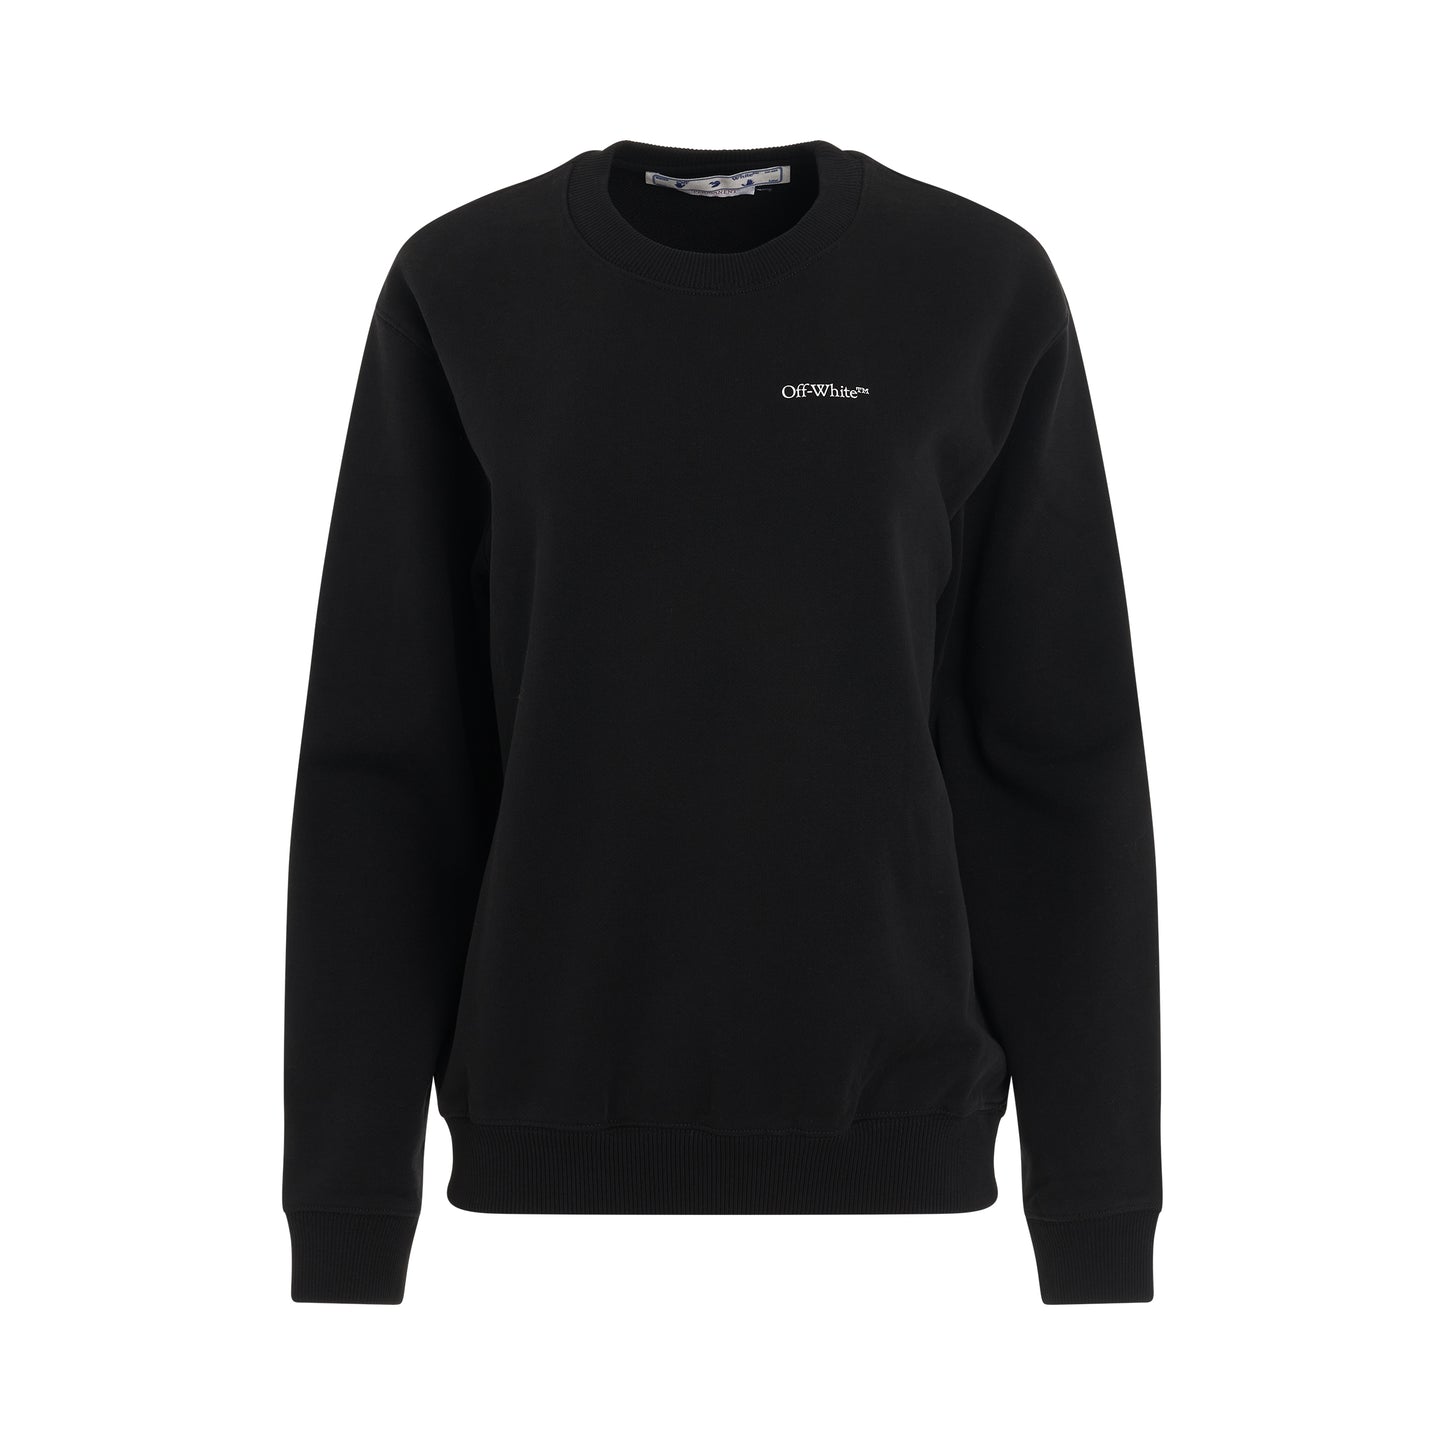 Bookish Regular Crewneck Sweatshirt in Black/White